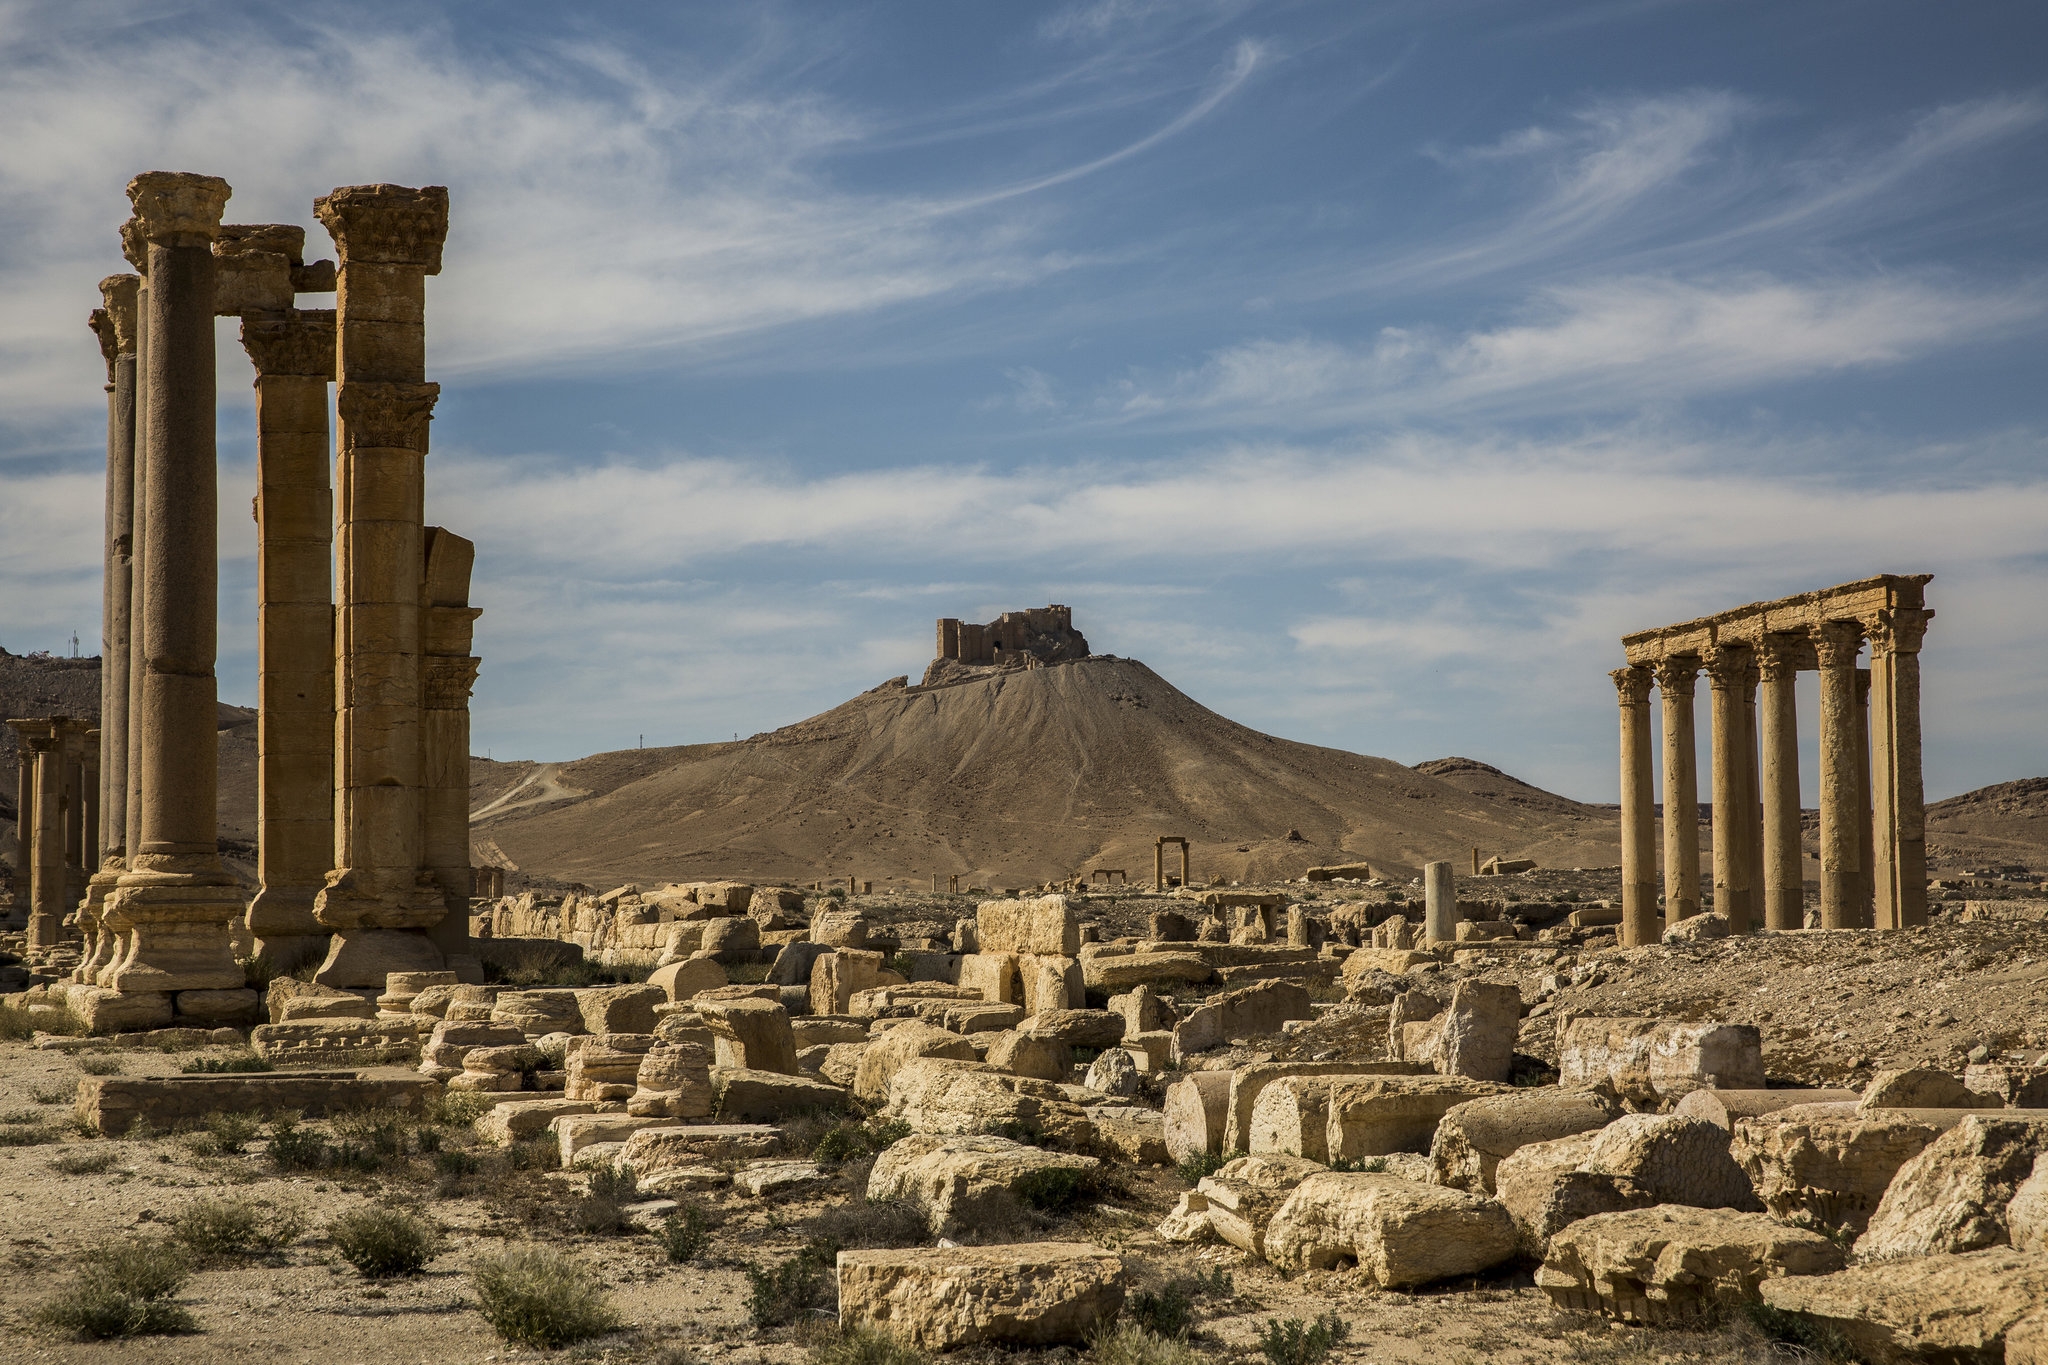 Landscape of archaeological ruins